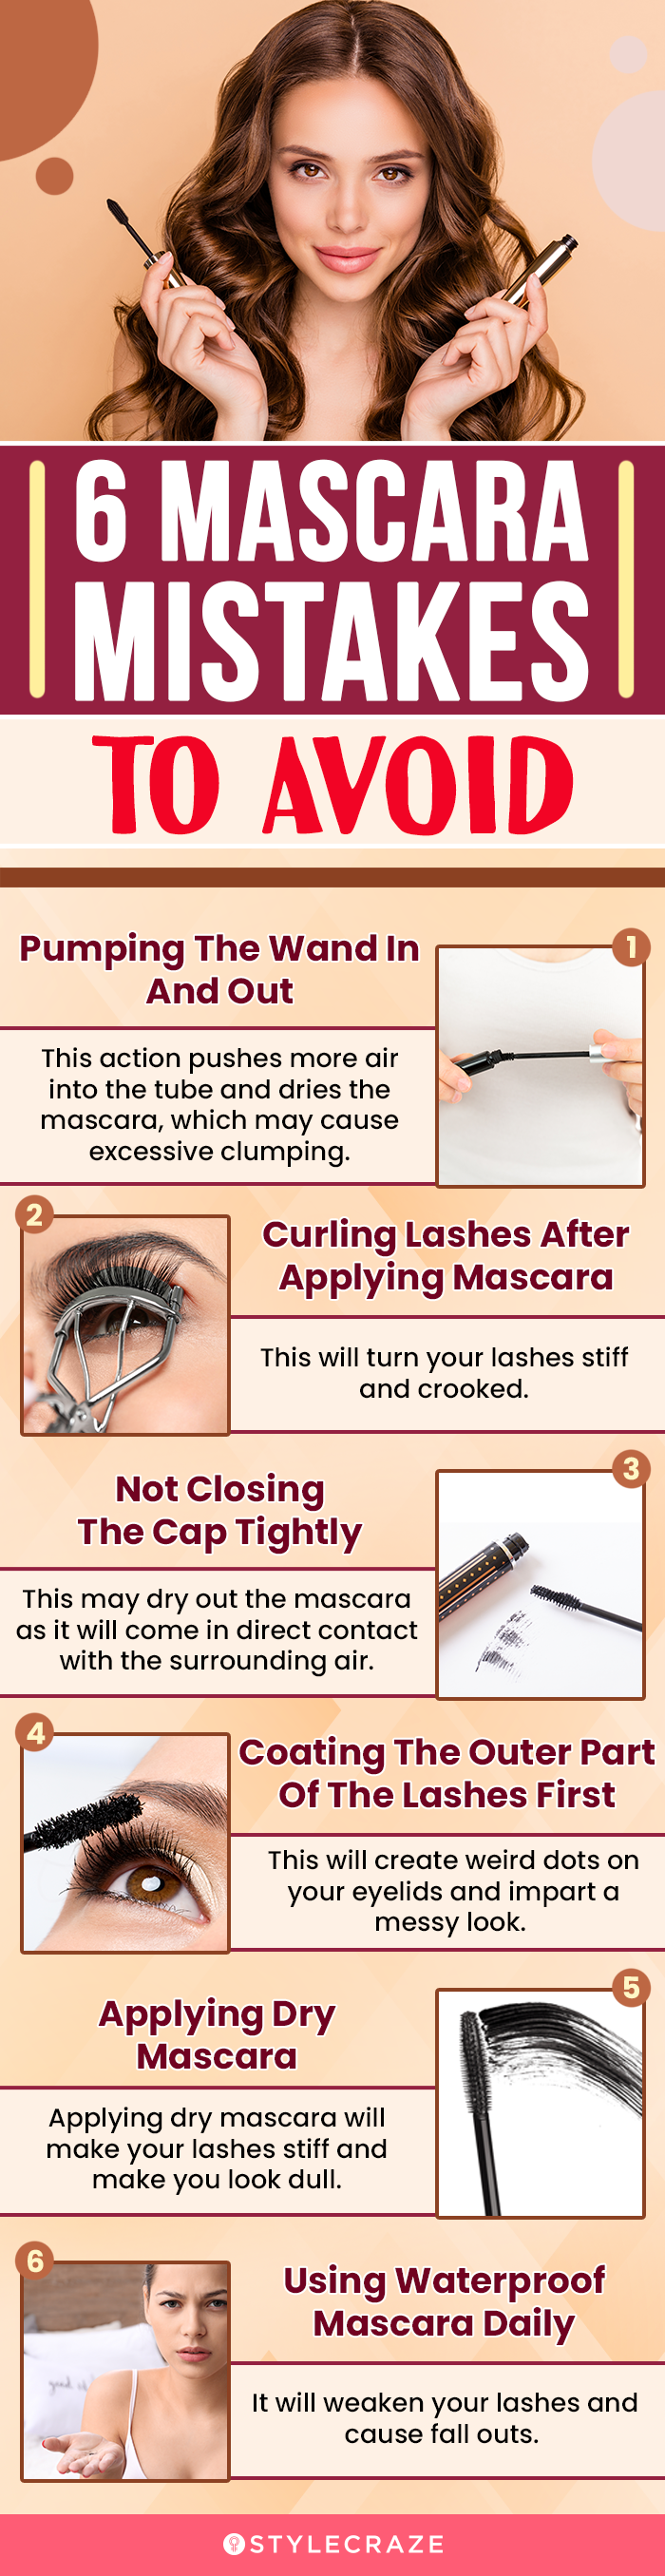 6 Mascara Mistakes To Avoid (infographic)